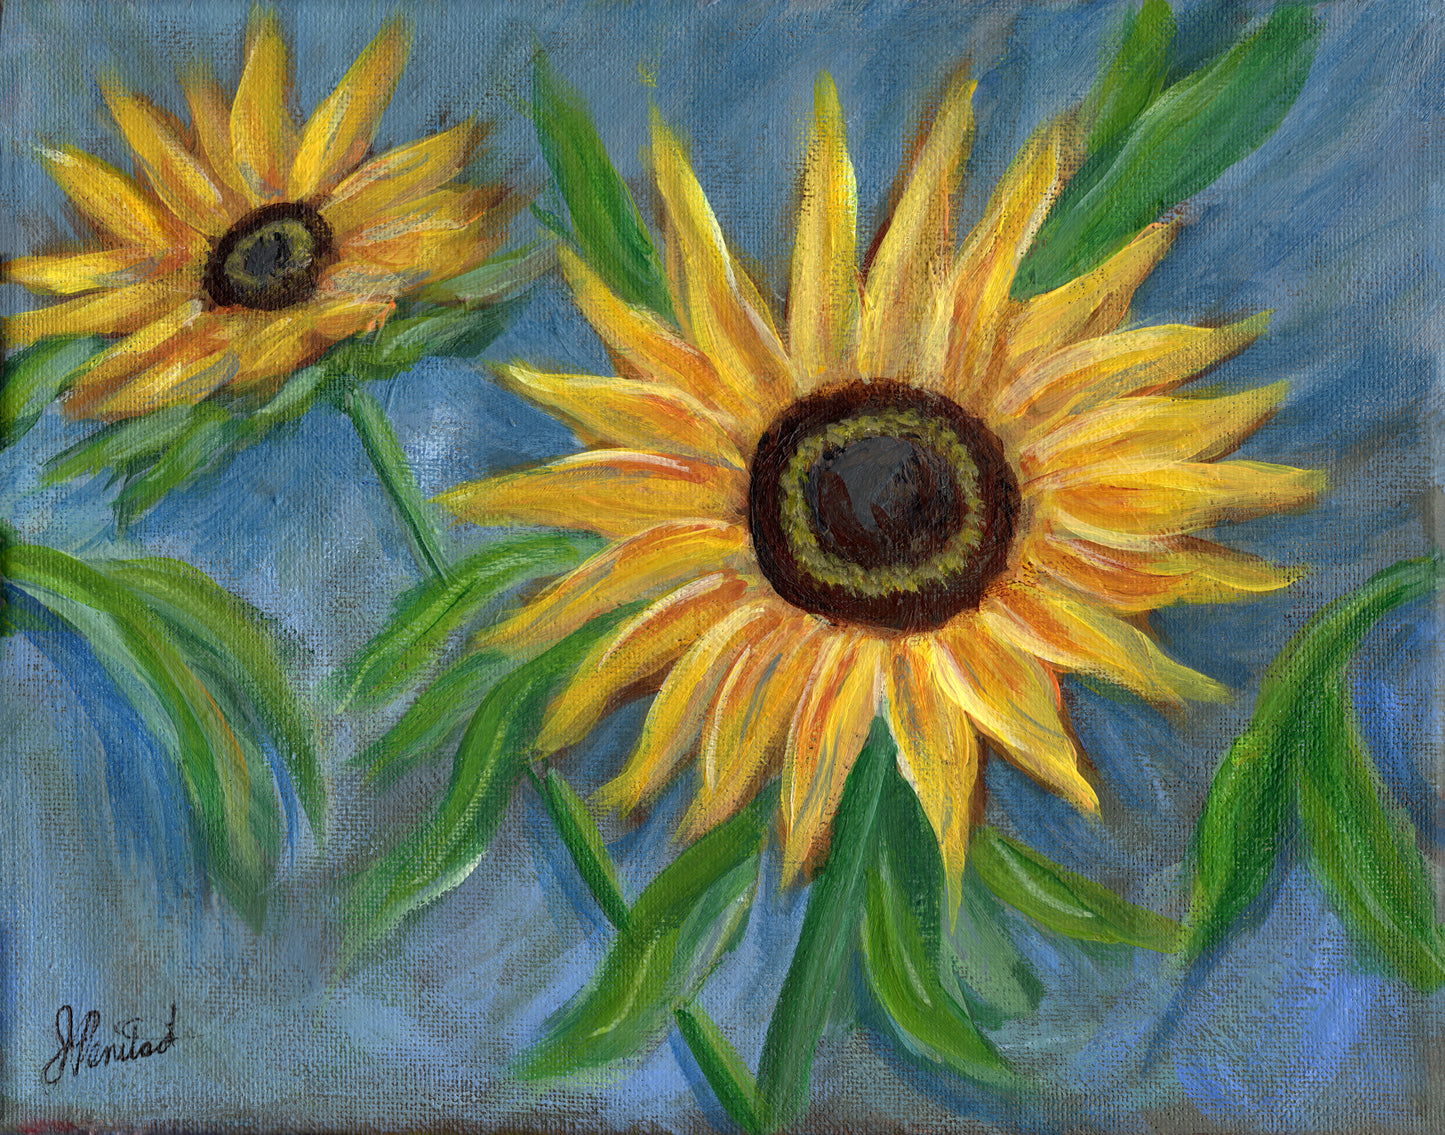 *New arrival! Sunflower Dream Original Painting